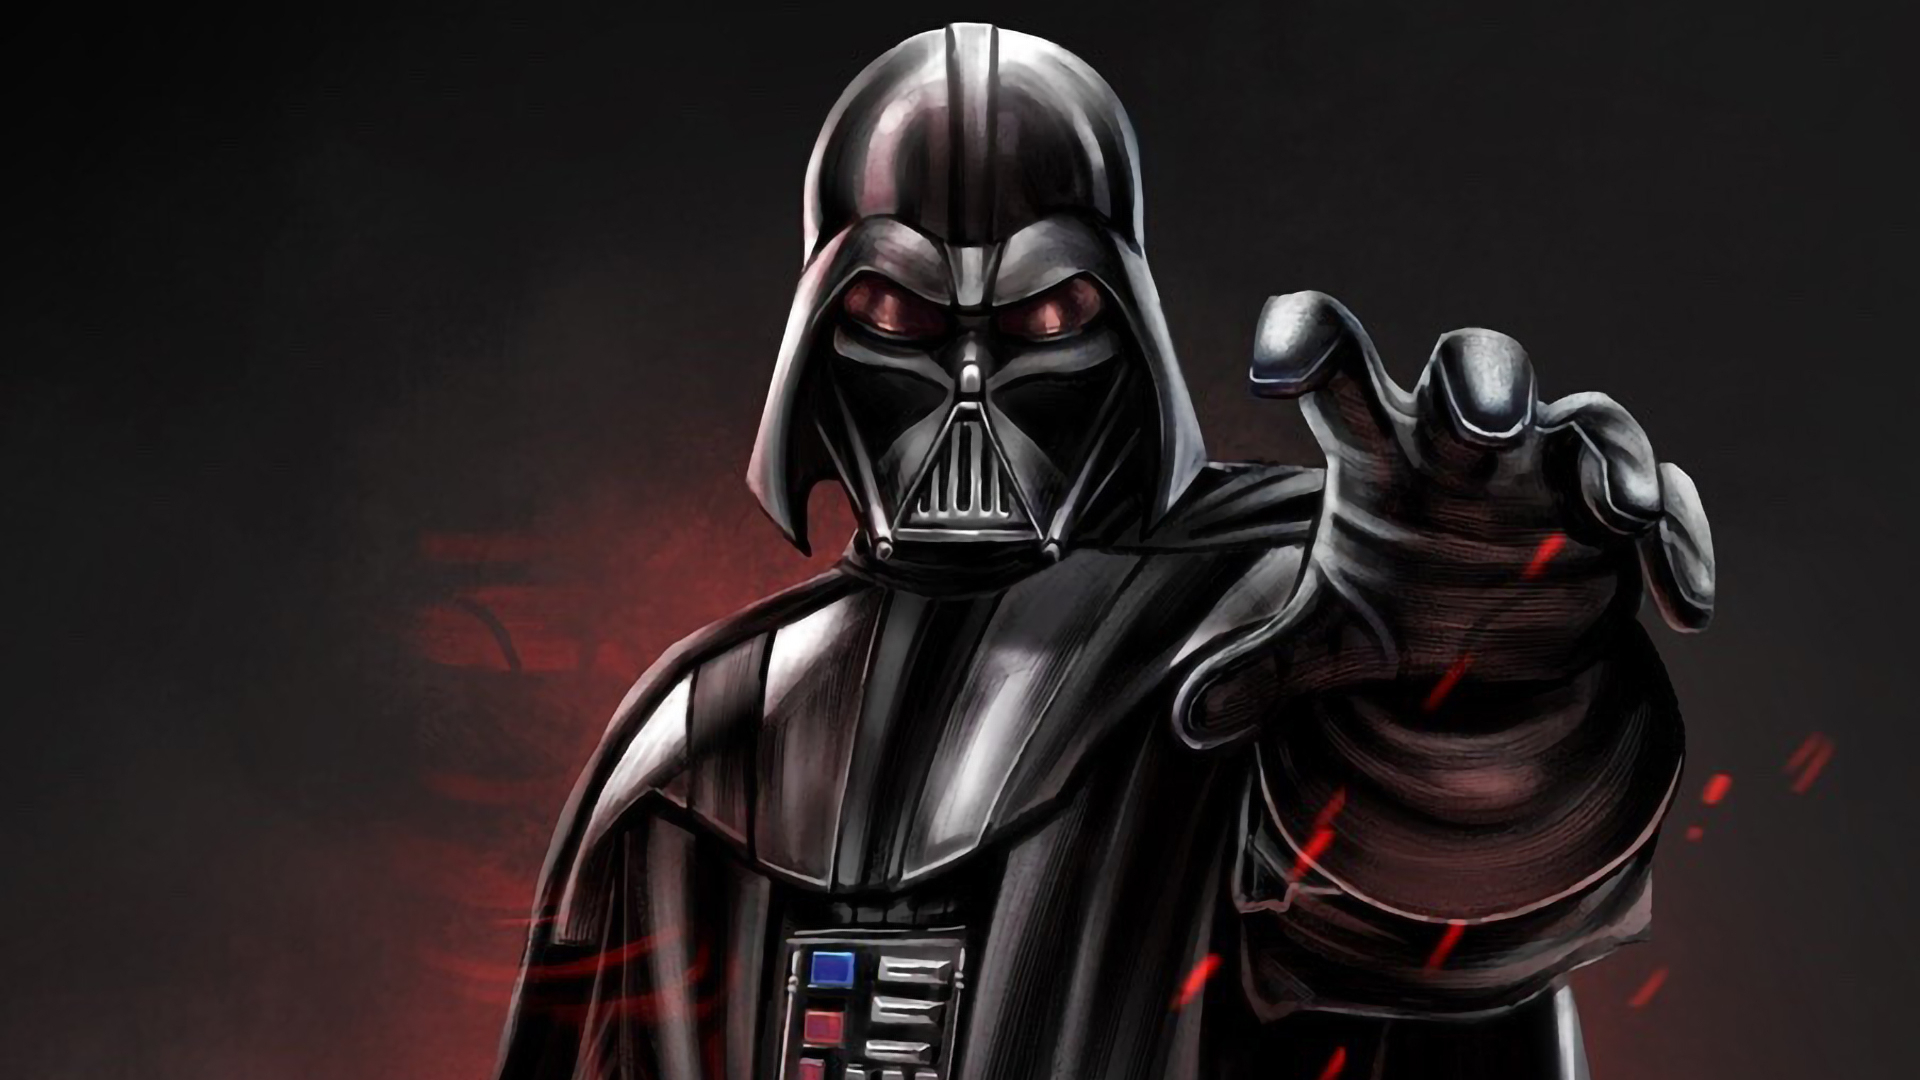 Is Darth Vader In Star Wars